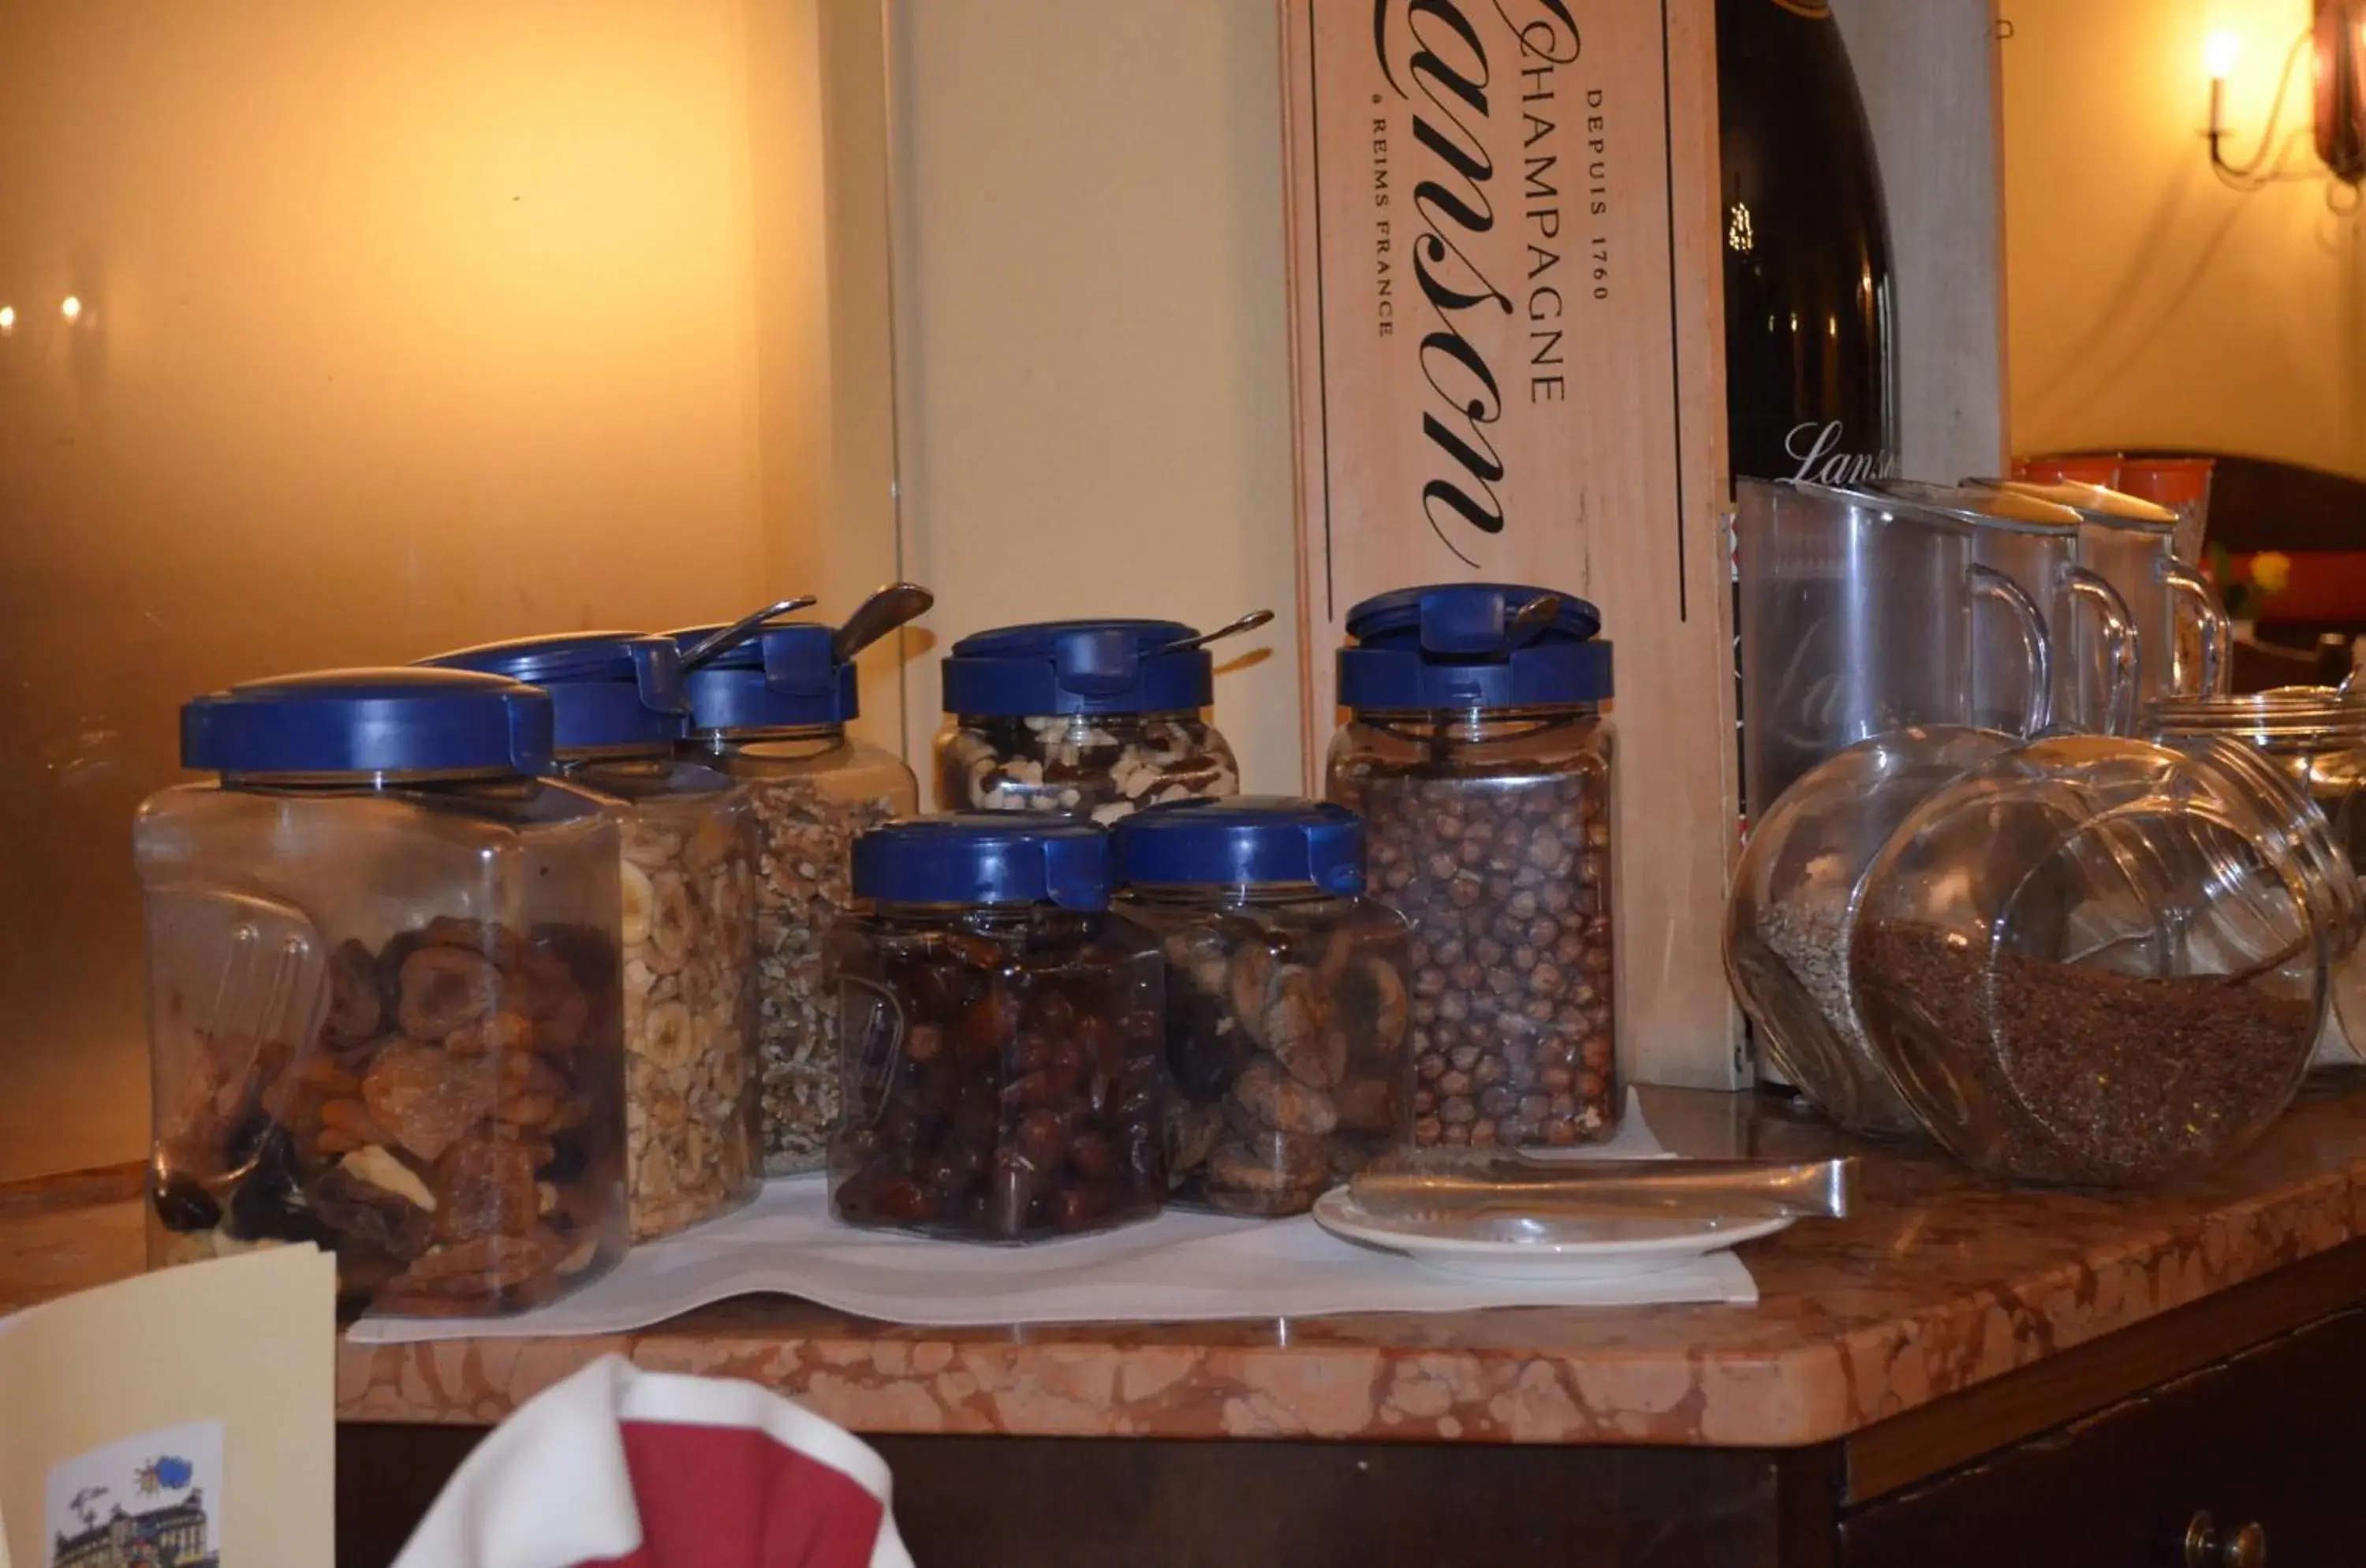 Buffet breakfast in Hotel Landhaus Milser